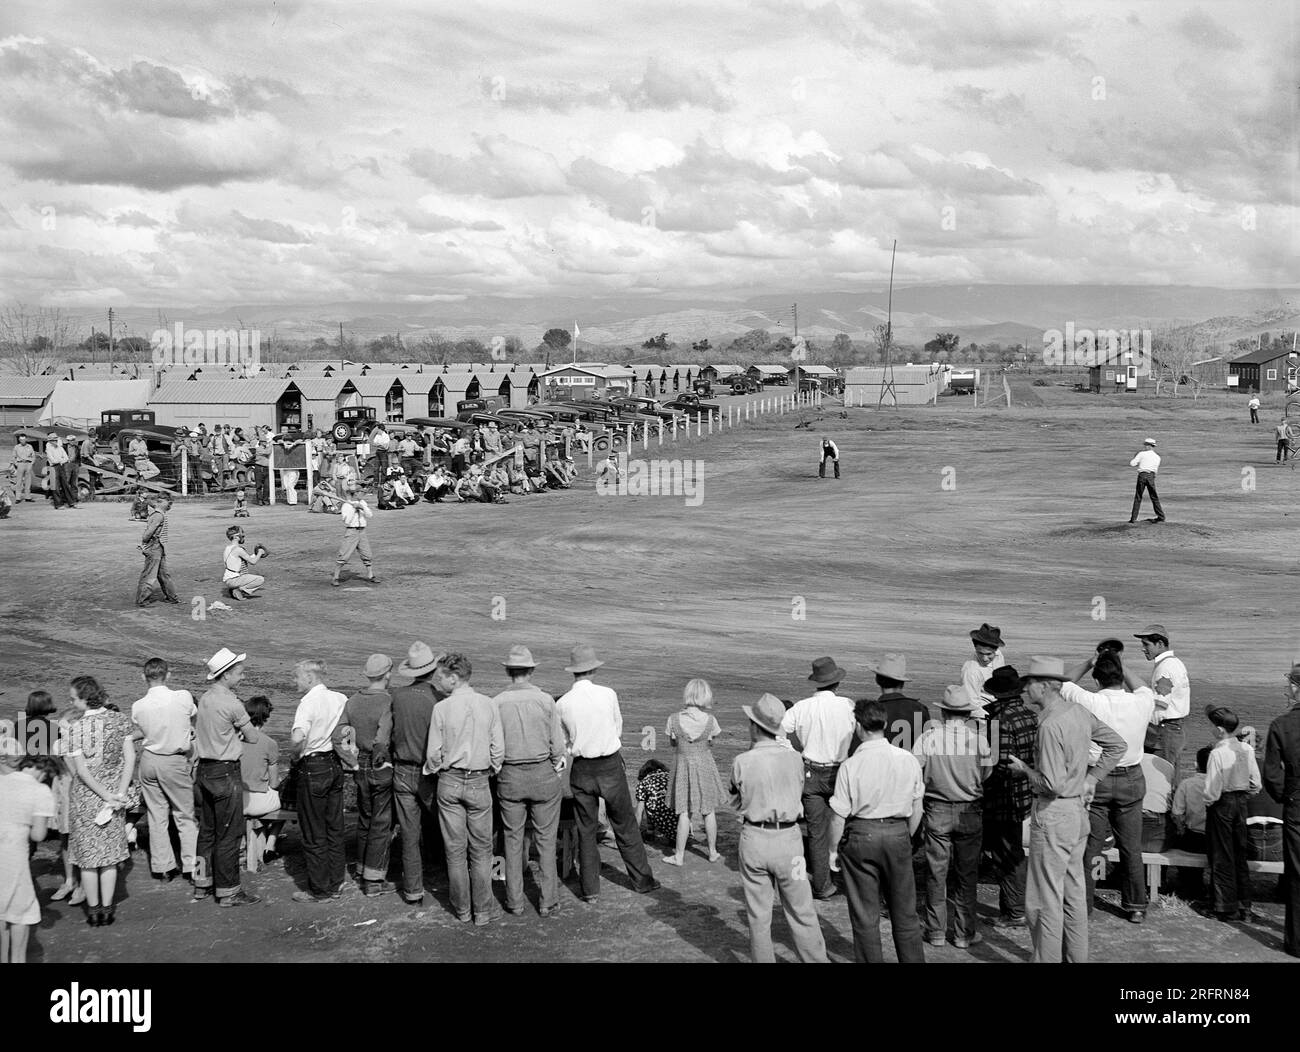 Baseball game, Farm Security Administration migratory labor camp, Visalia, Tulare County, California, USA, Arthur Rothstein, U.S. Farm Security Administration, March 1940 Stock Photo